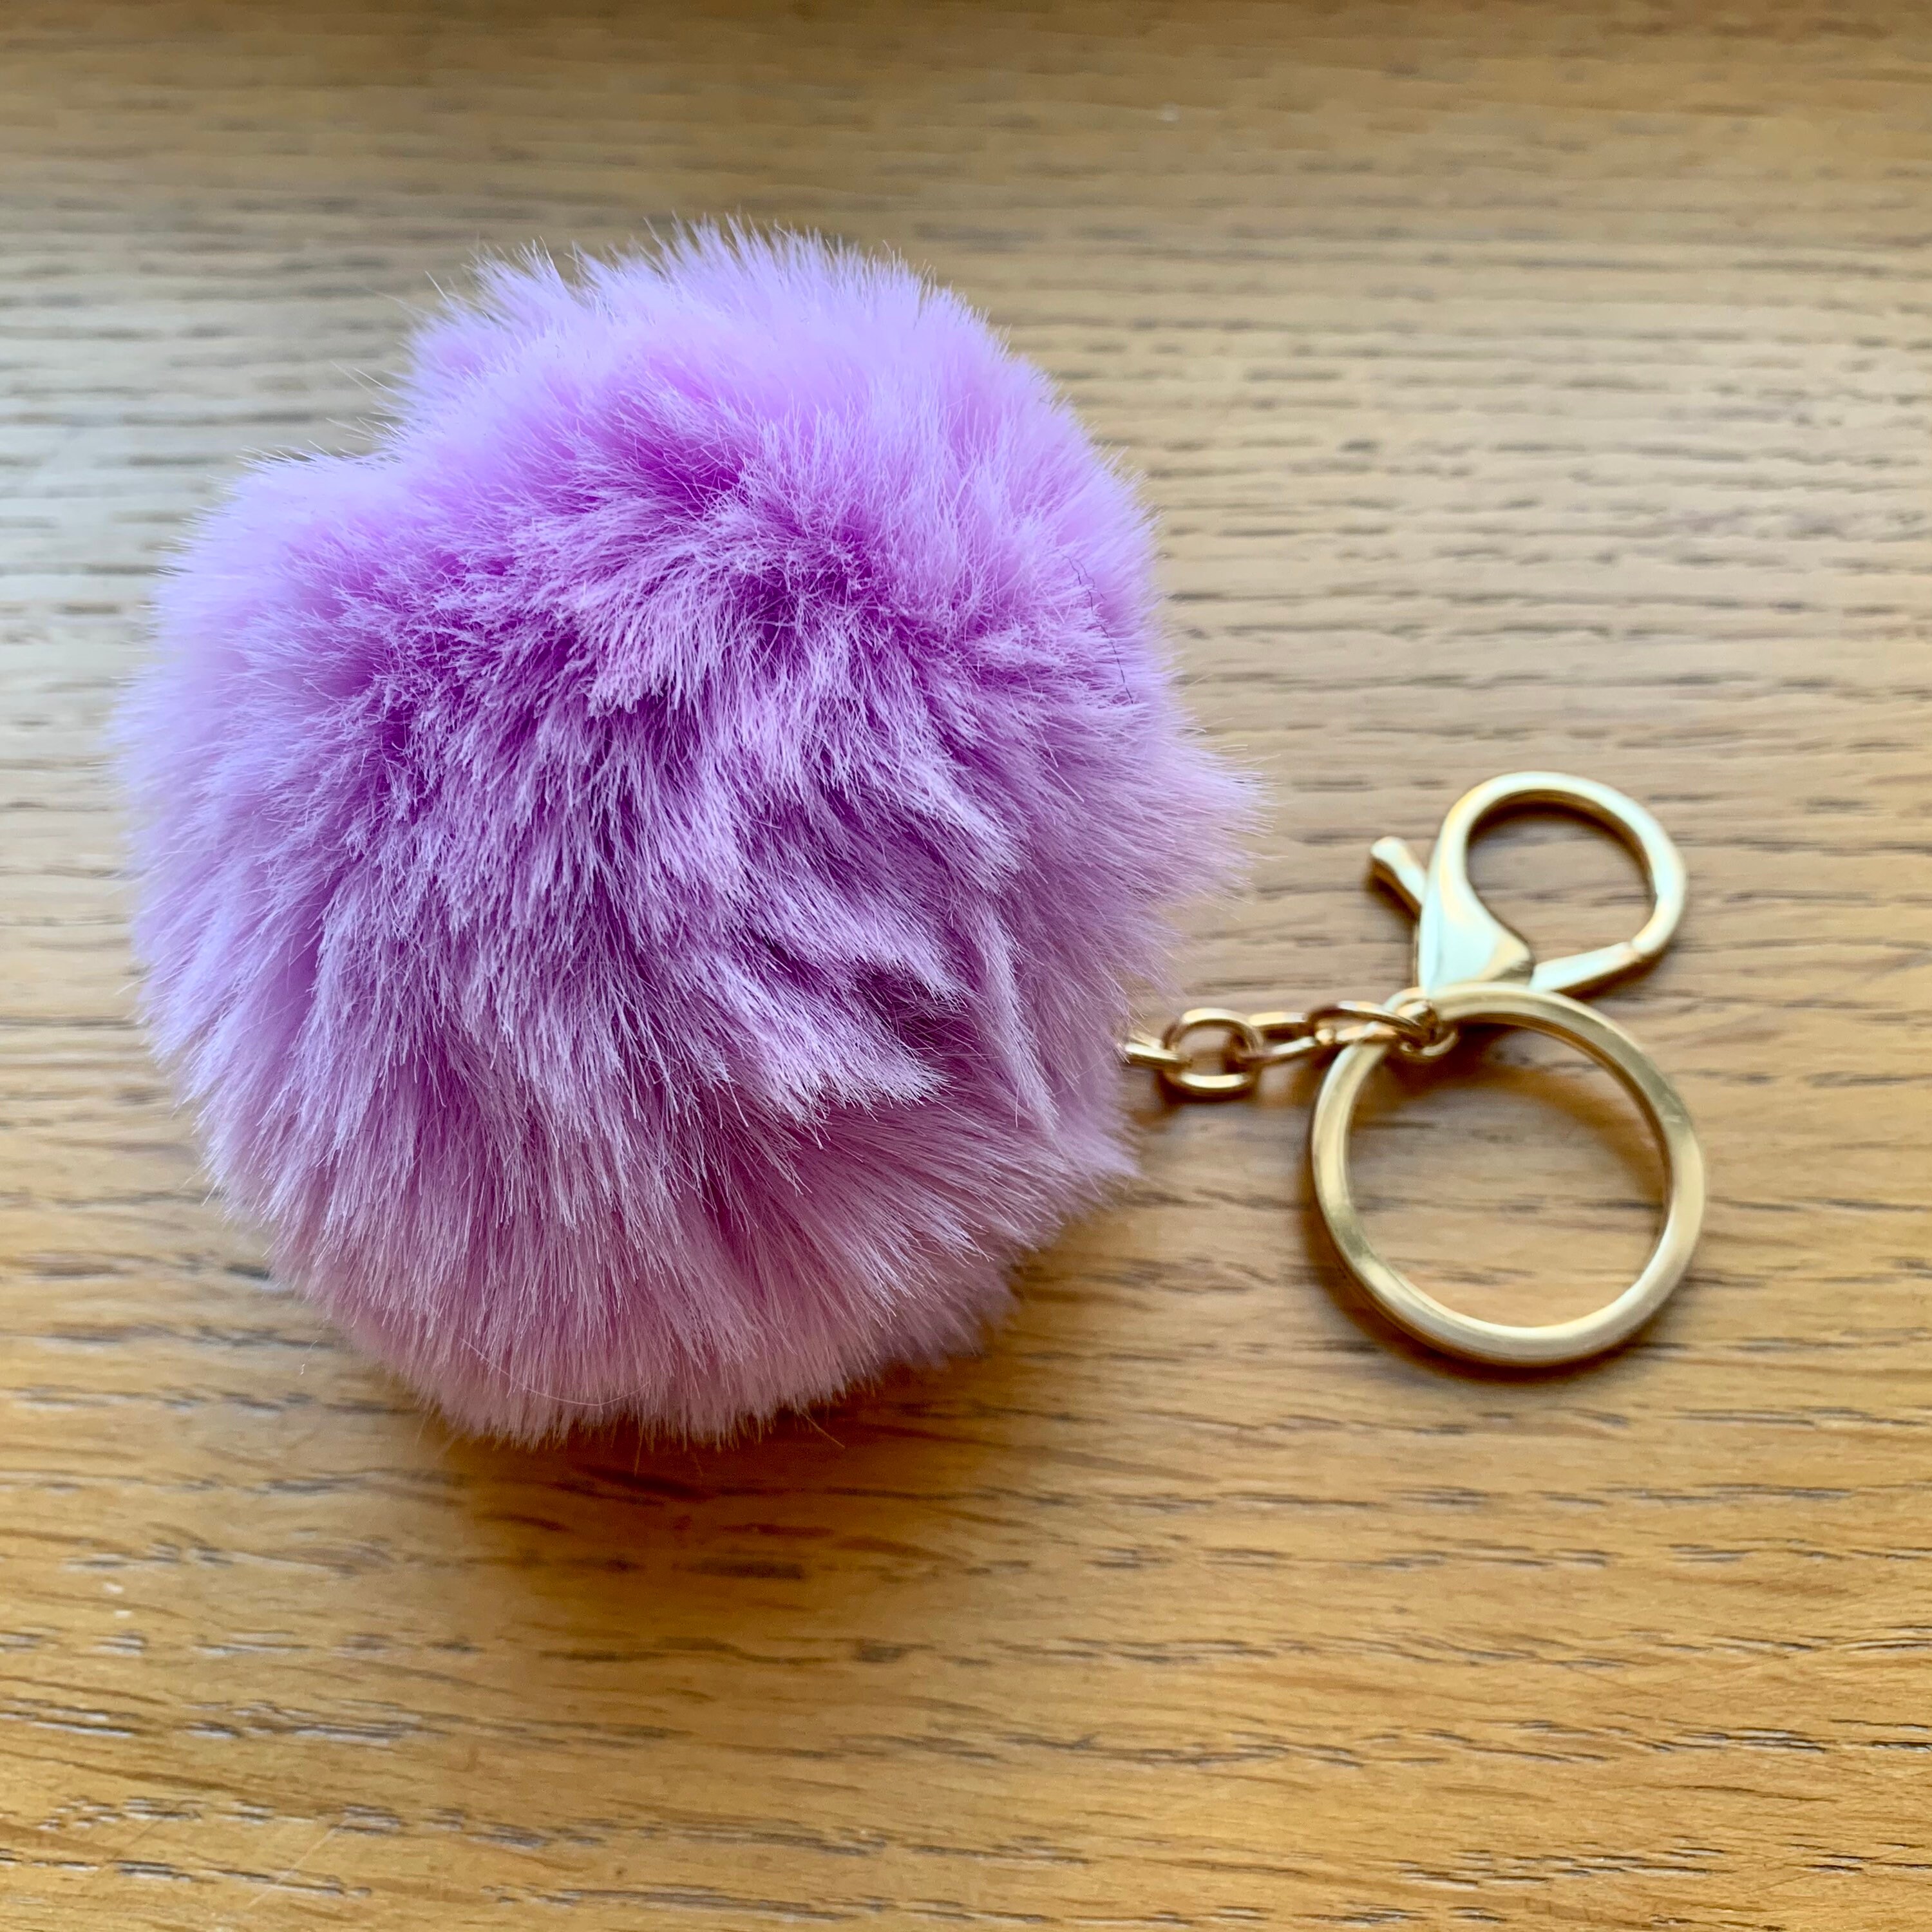 Fur Pom Pom Keyring Bag Charm Soft Fluffy Key Chain with English